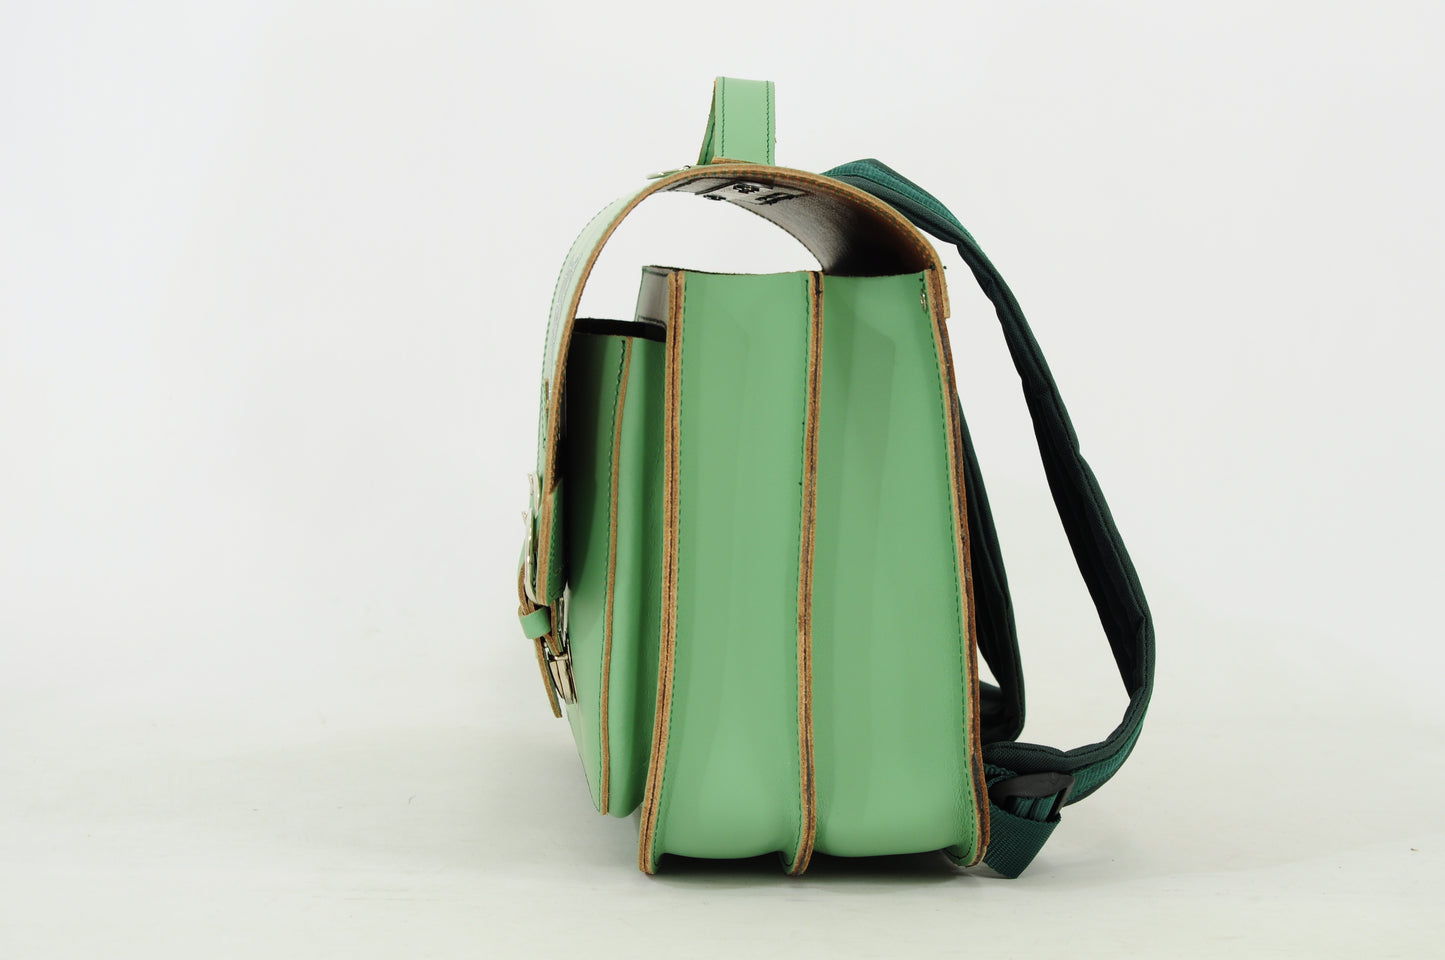 Own Stuff Leather Bookbag Madelief - Lila - Primary school